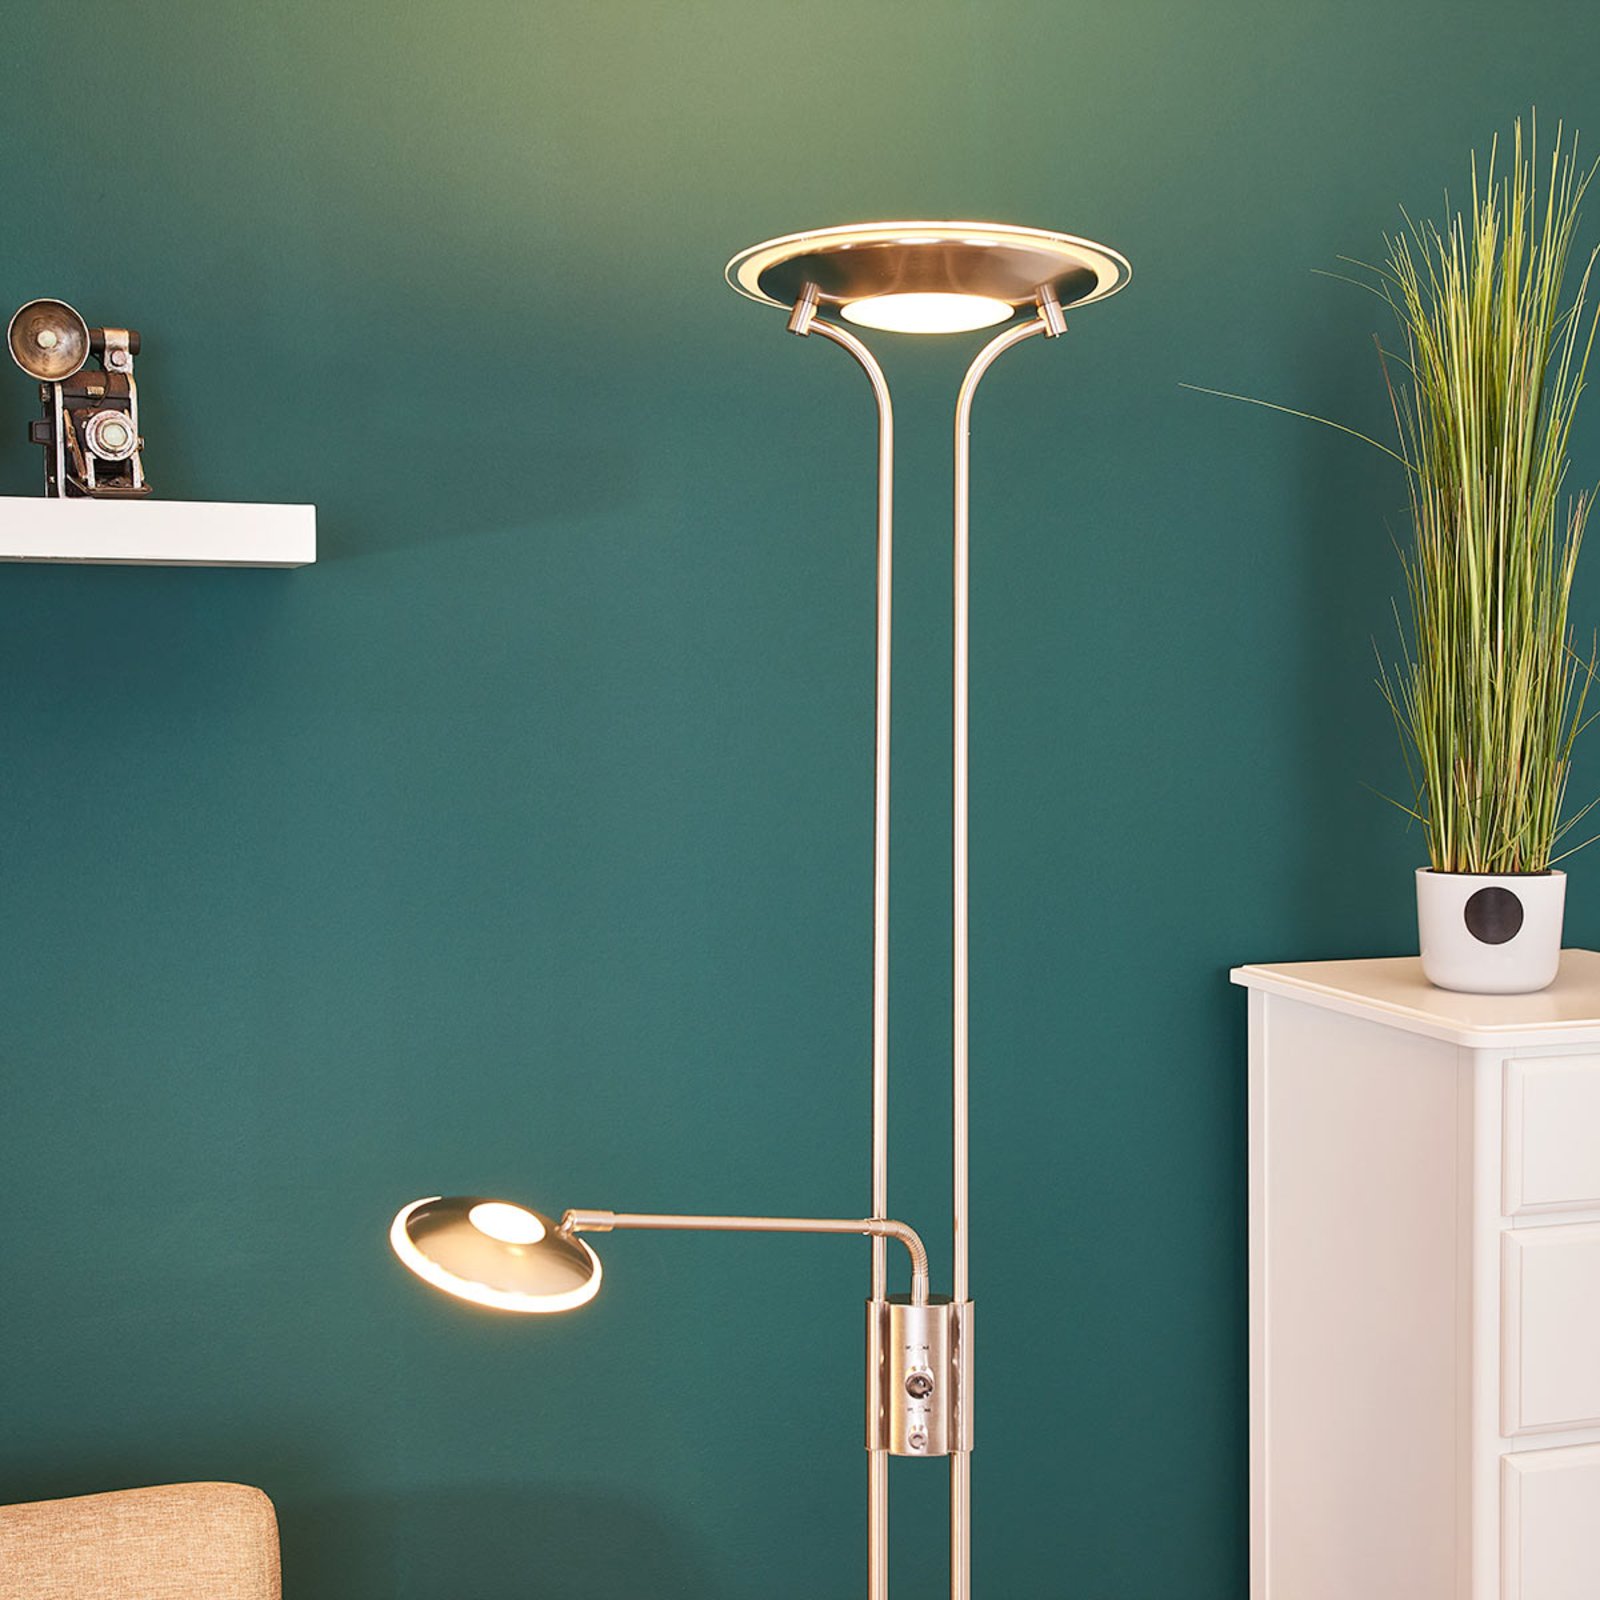 Lampa LED Aras oświetlająca sufit, kolor niklu